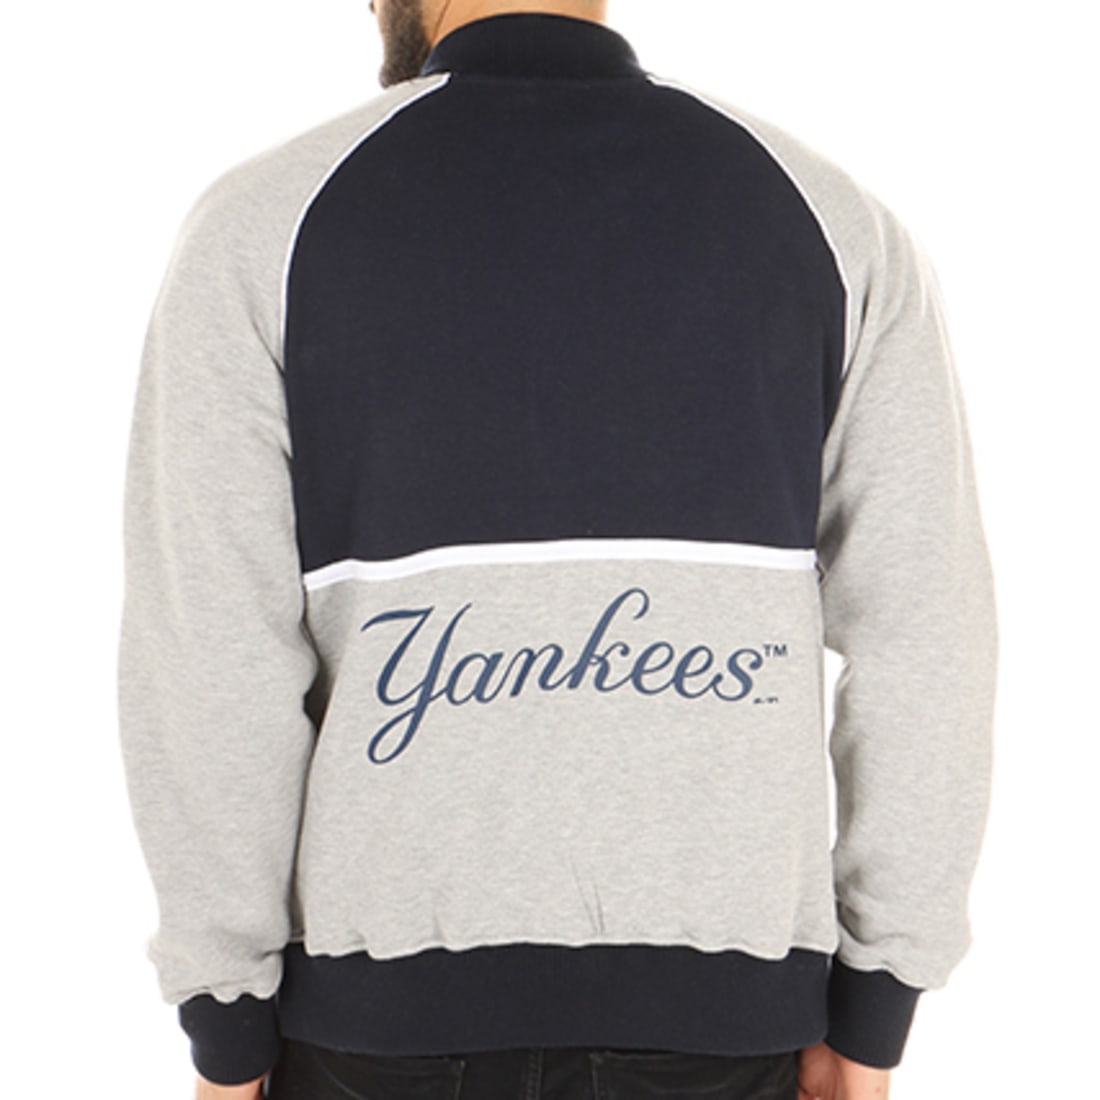 New York Yankees Majestic Athletic Letterman Jacket (MNY3774NL)